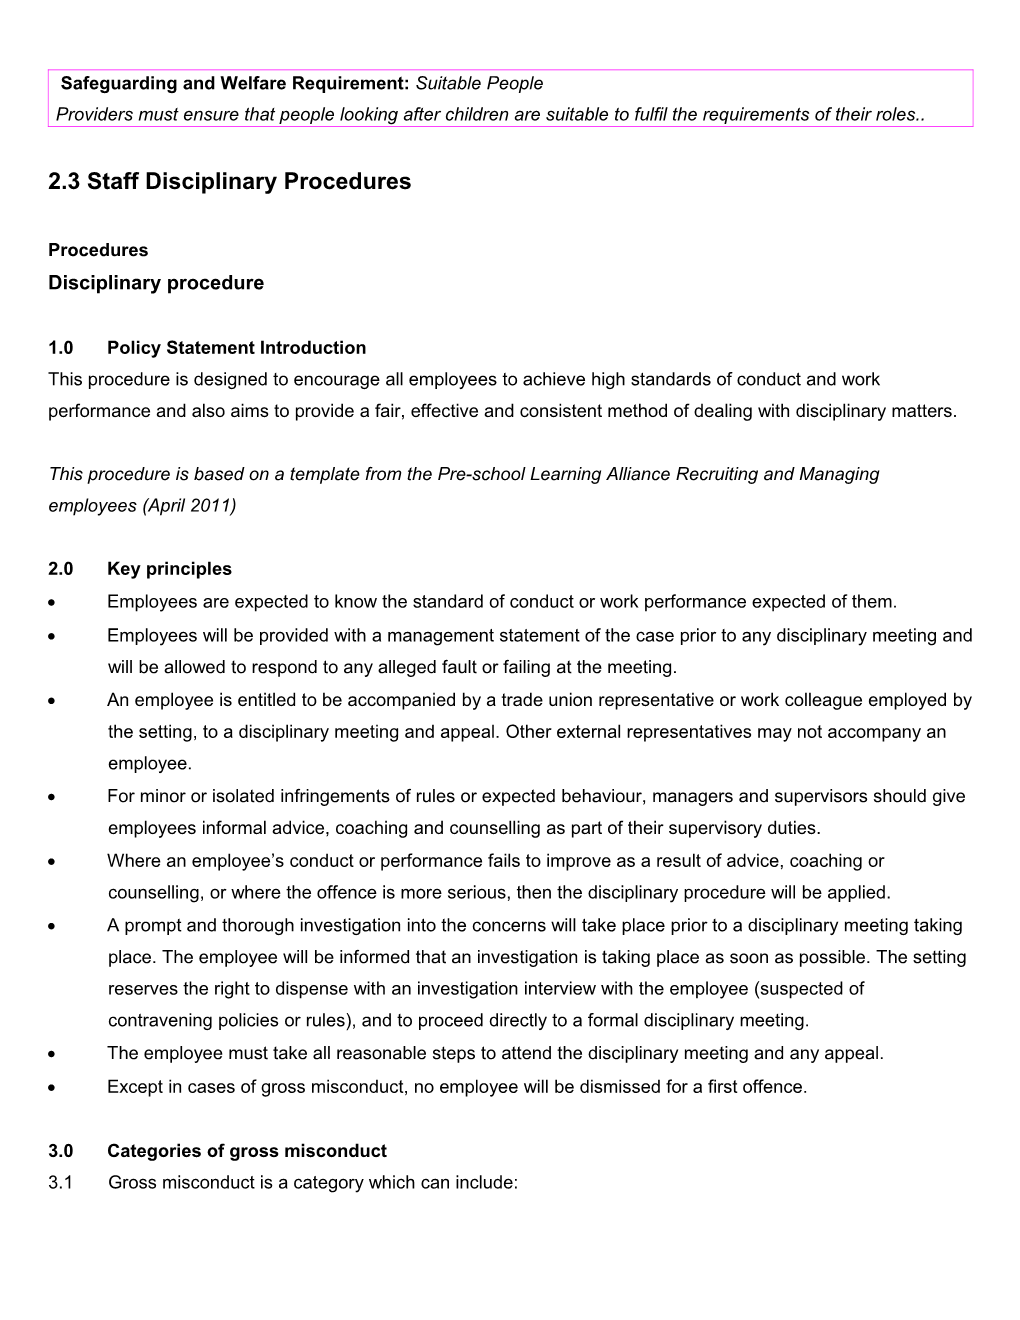 2.3 Staff Disciplinary Procedures